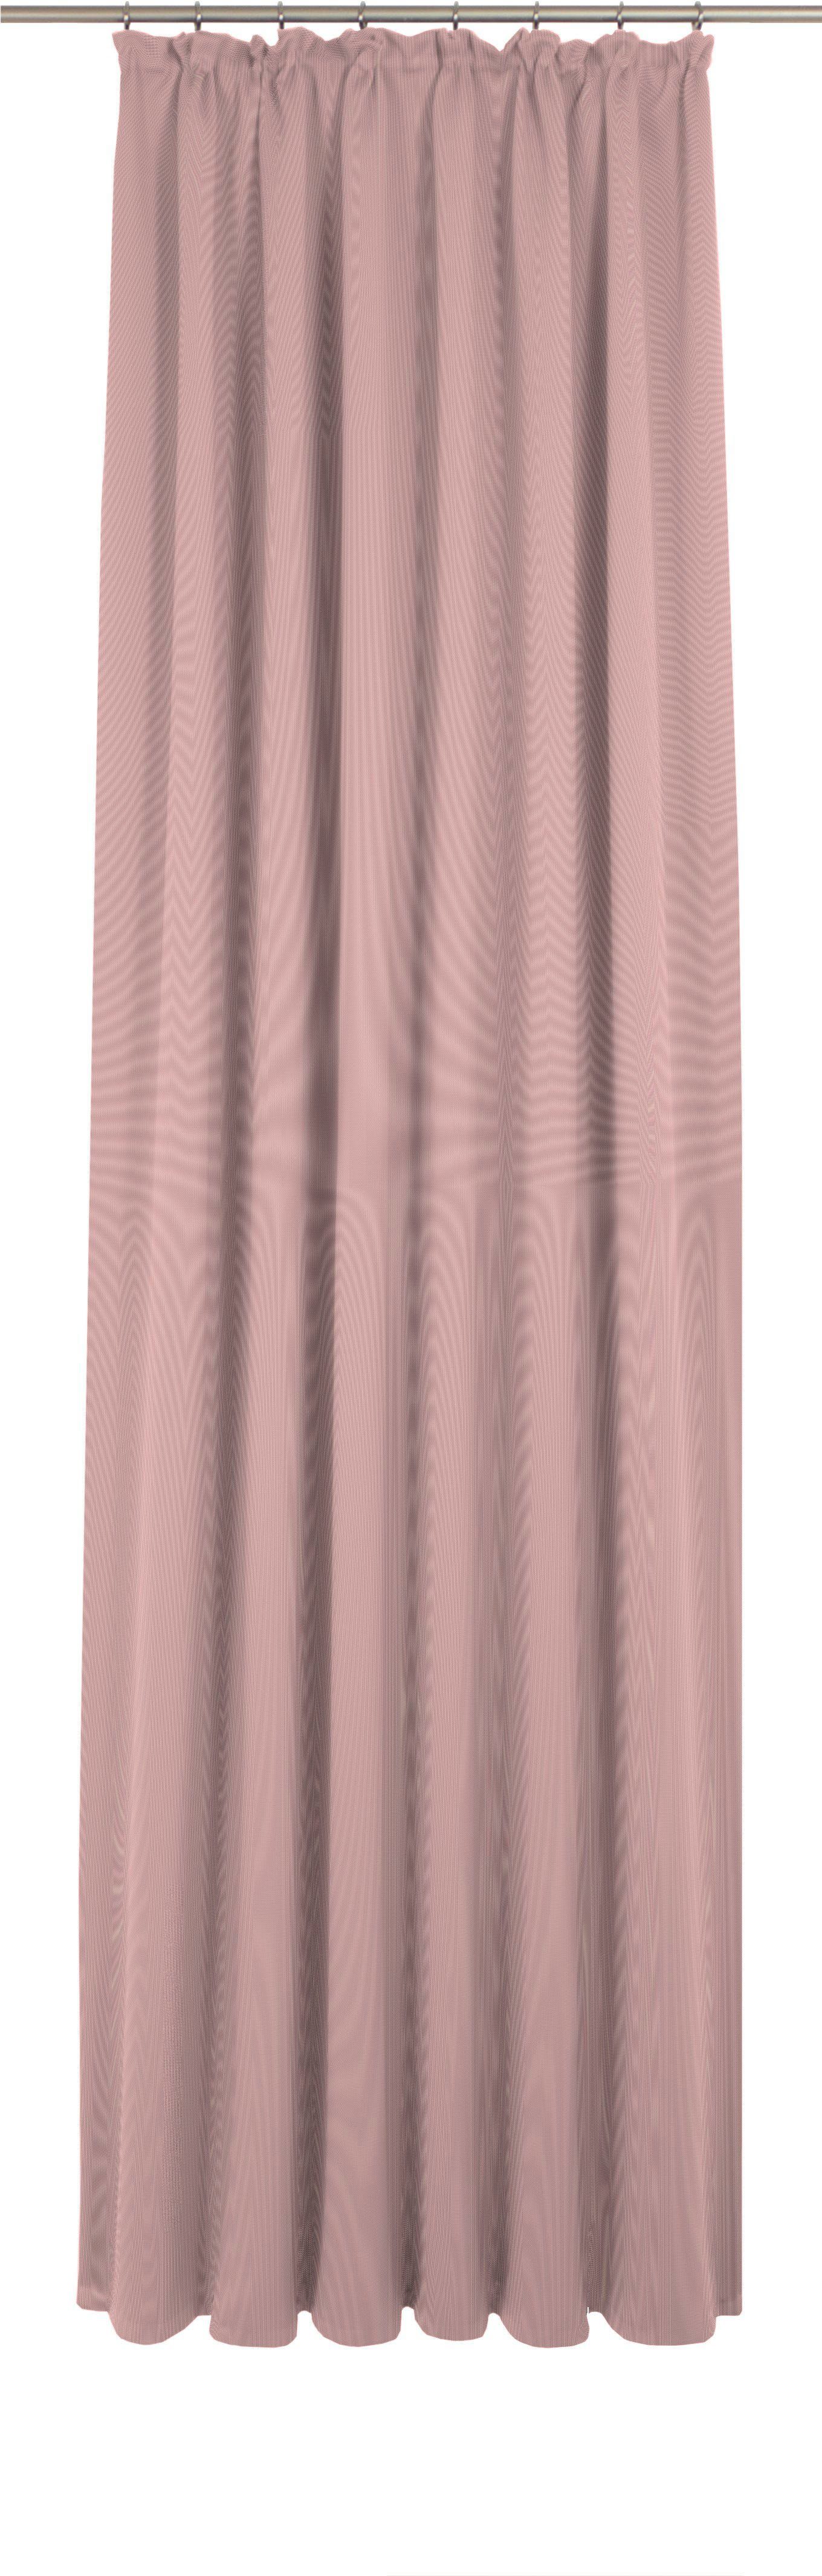 Vorhang Uni Collection, Adam, Kräuselband St), blickdicht, (1 rosa nachhaltig Jacquard